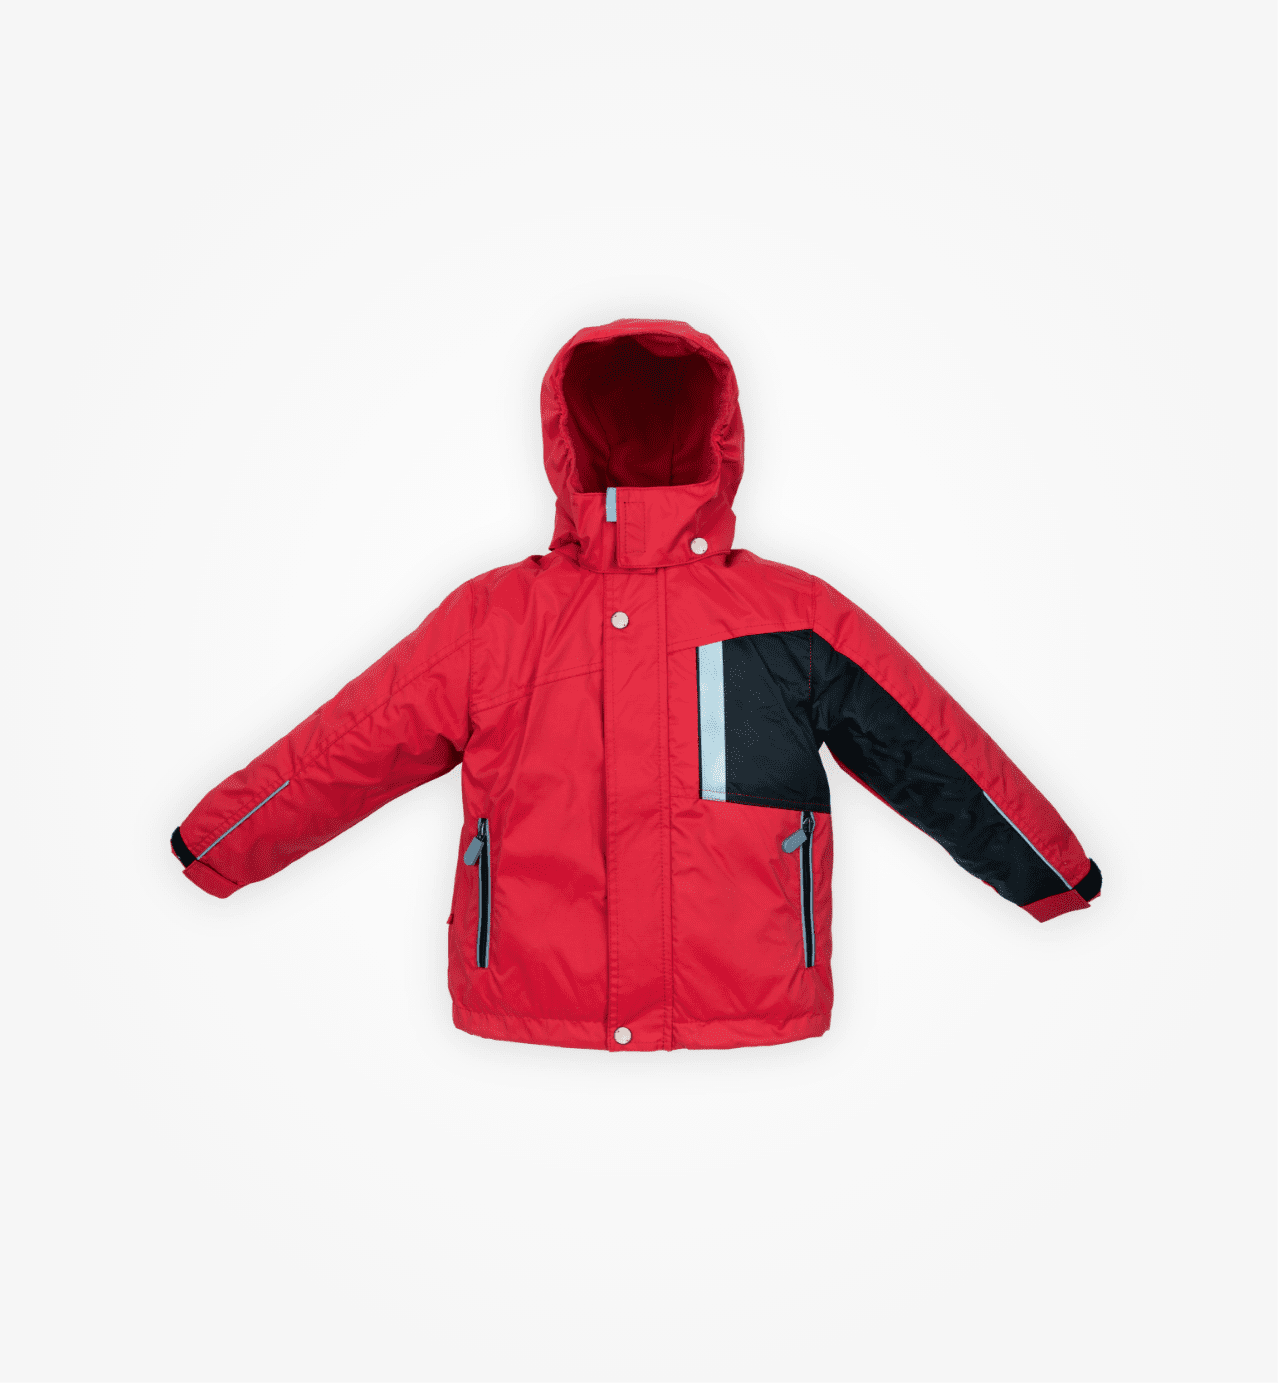 Red Winter Jacket - Phlox Shop